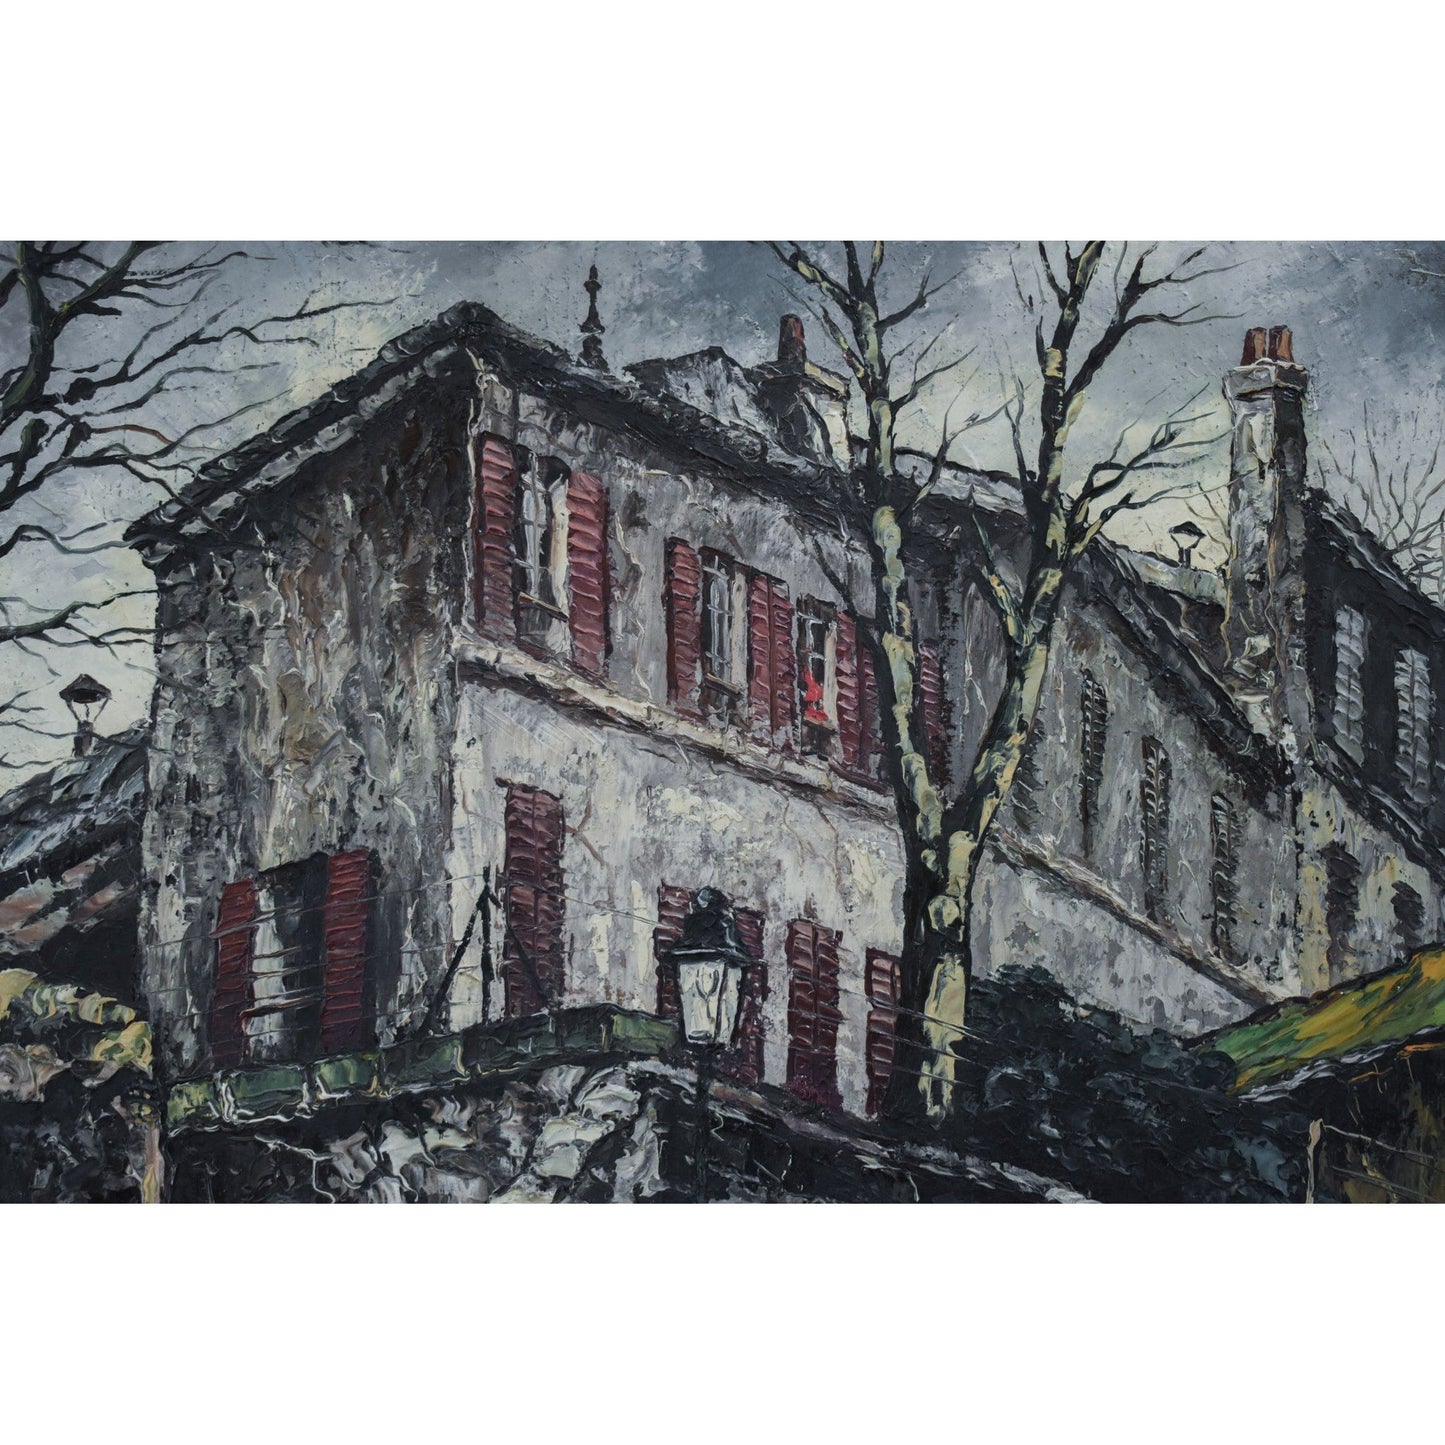 Vintage cityscape oil painting Paris Montmartre street view original 1958 by Andre Boyer for sale at Winckelmann Gallery